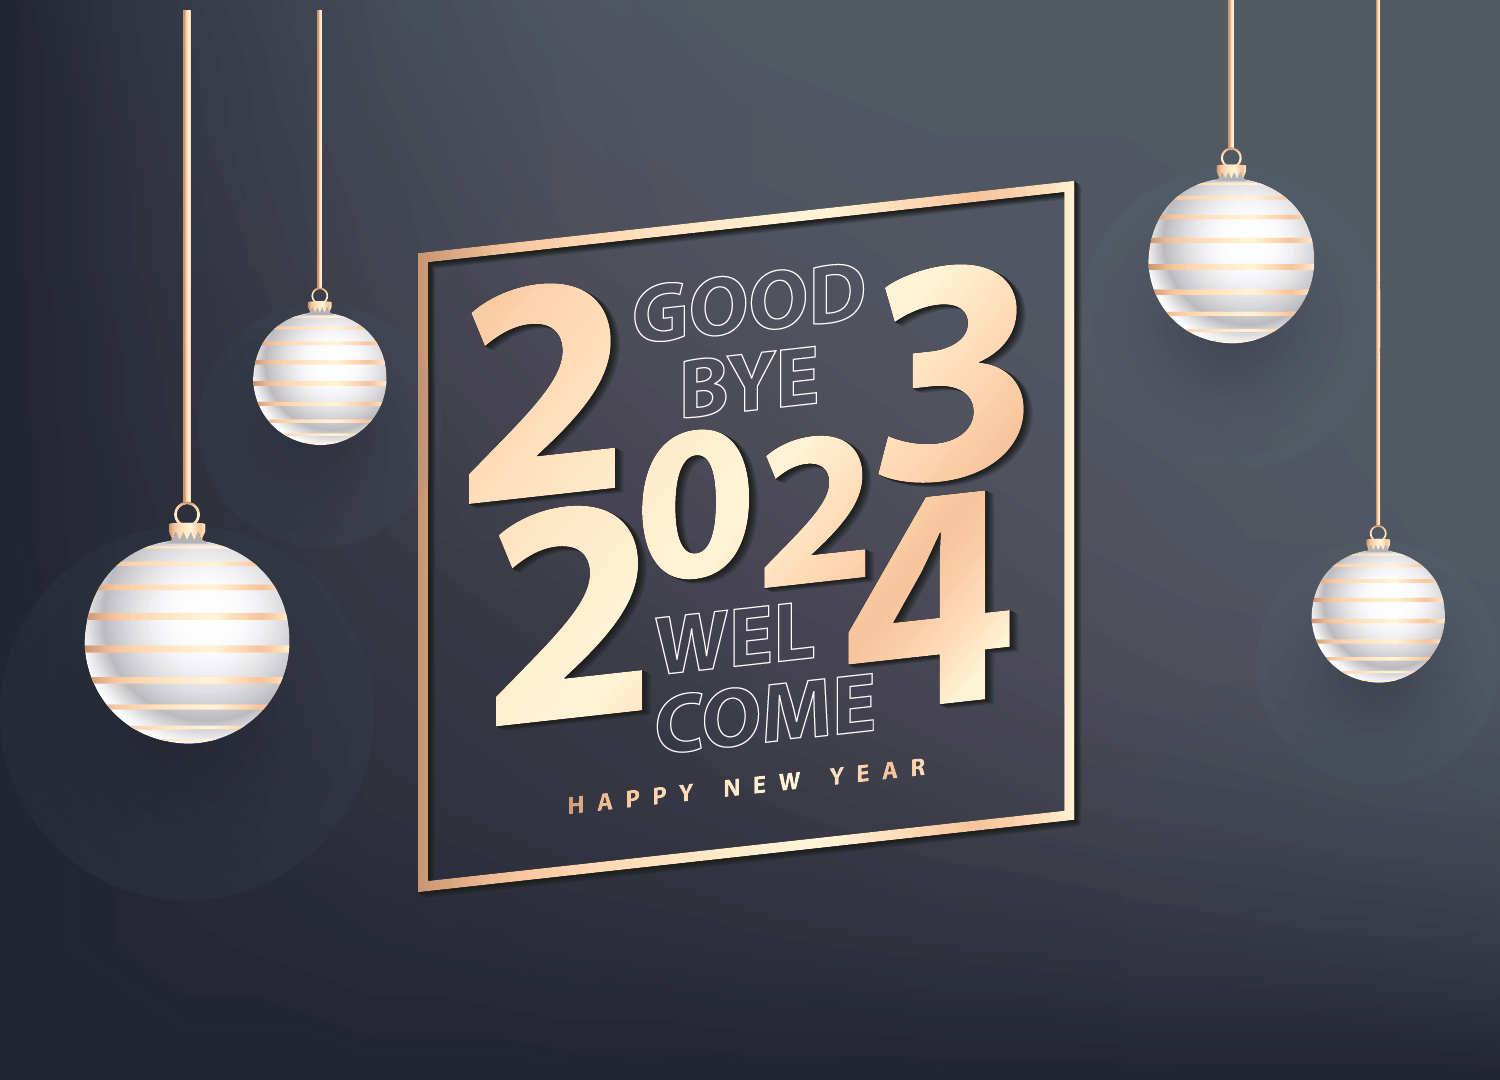 Goodbye 2023 Welcome New Year 2024 (2)